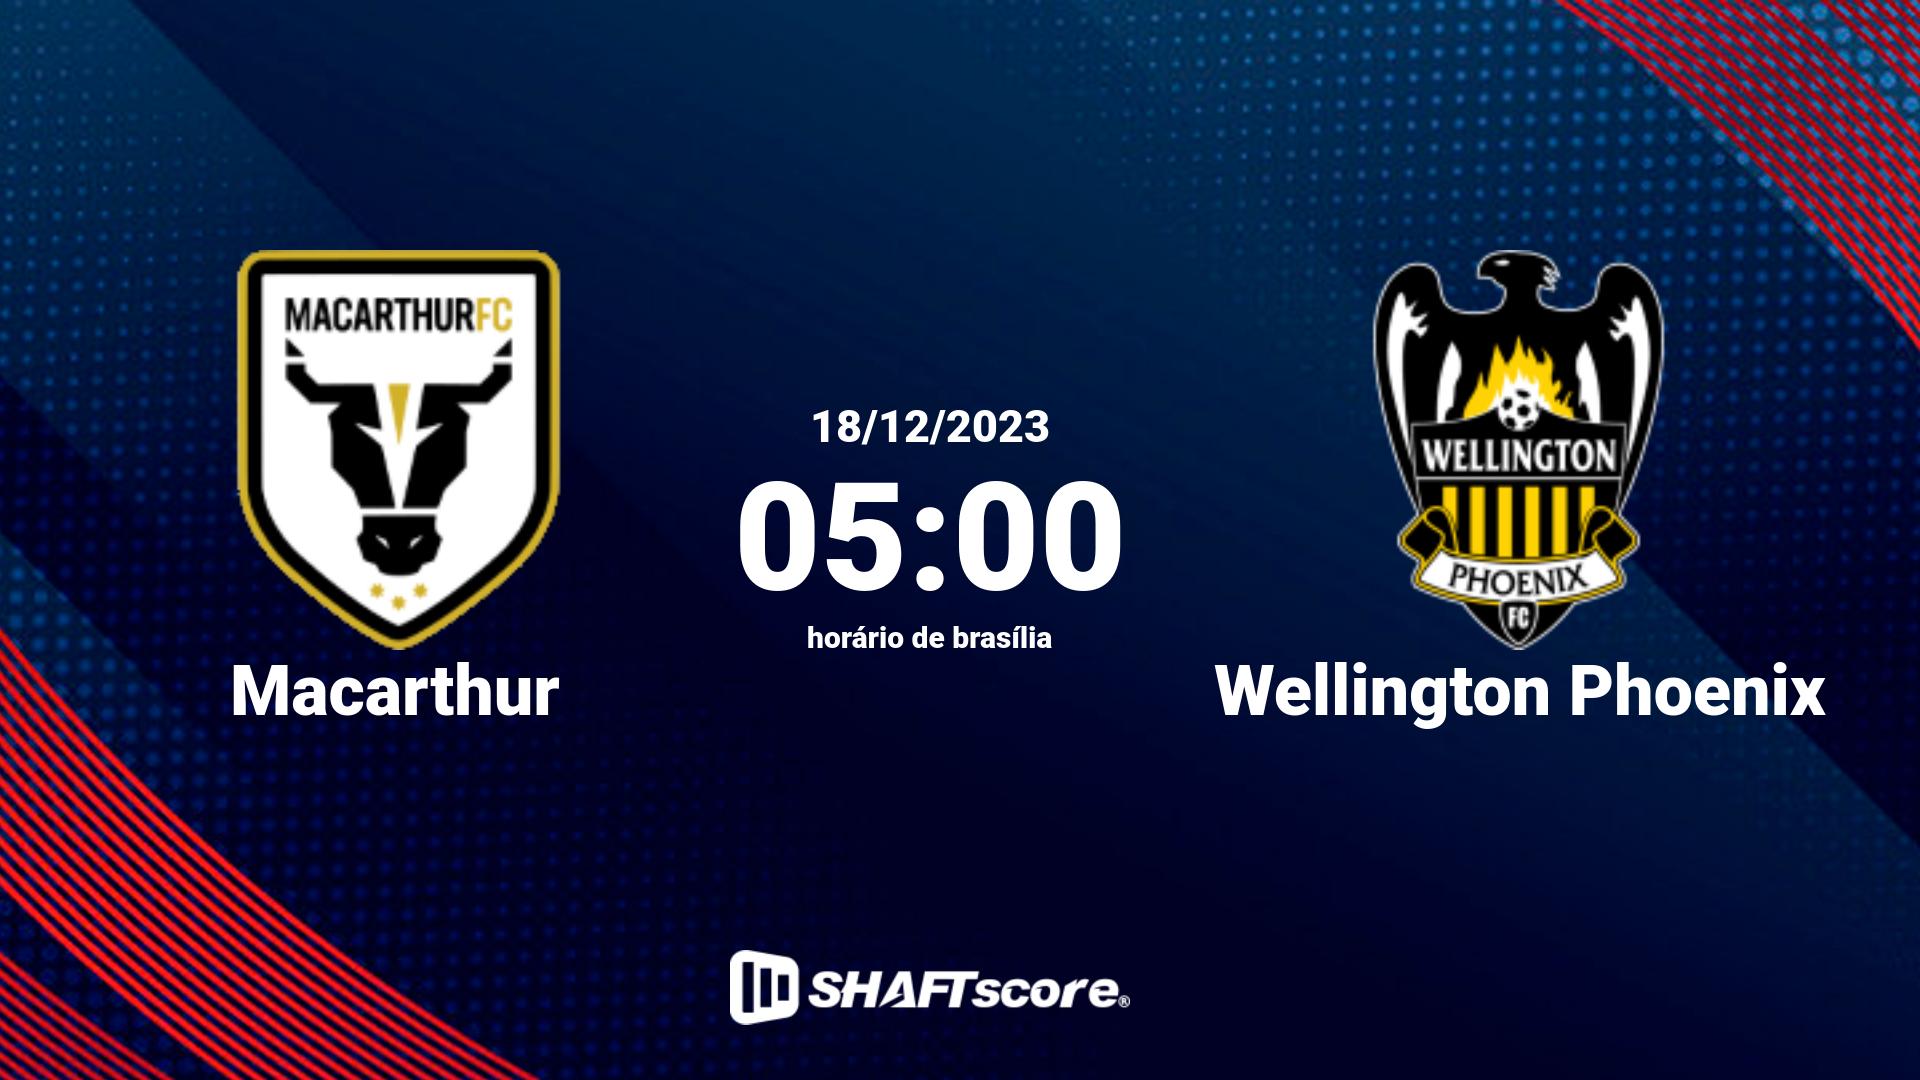 Estatísticas do jogo Macarthur vs Wellington Phoenix 18.12 05:00